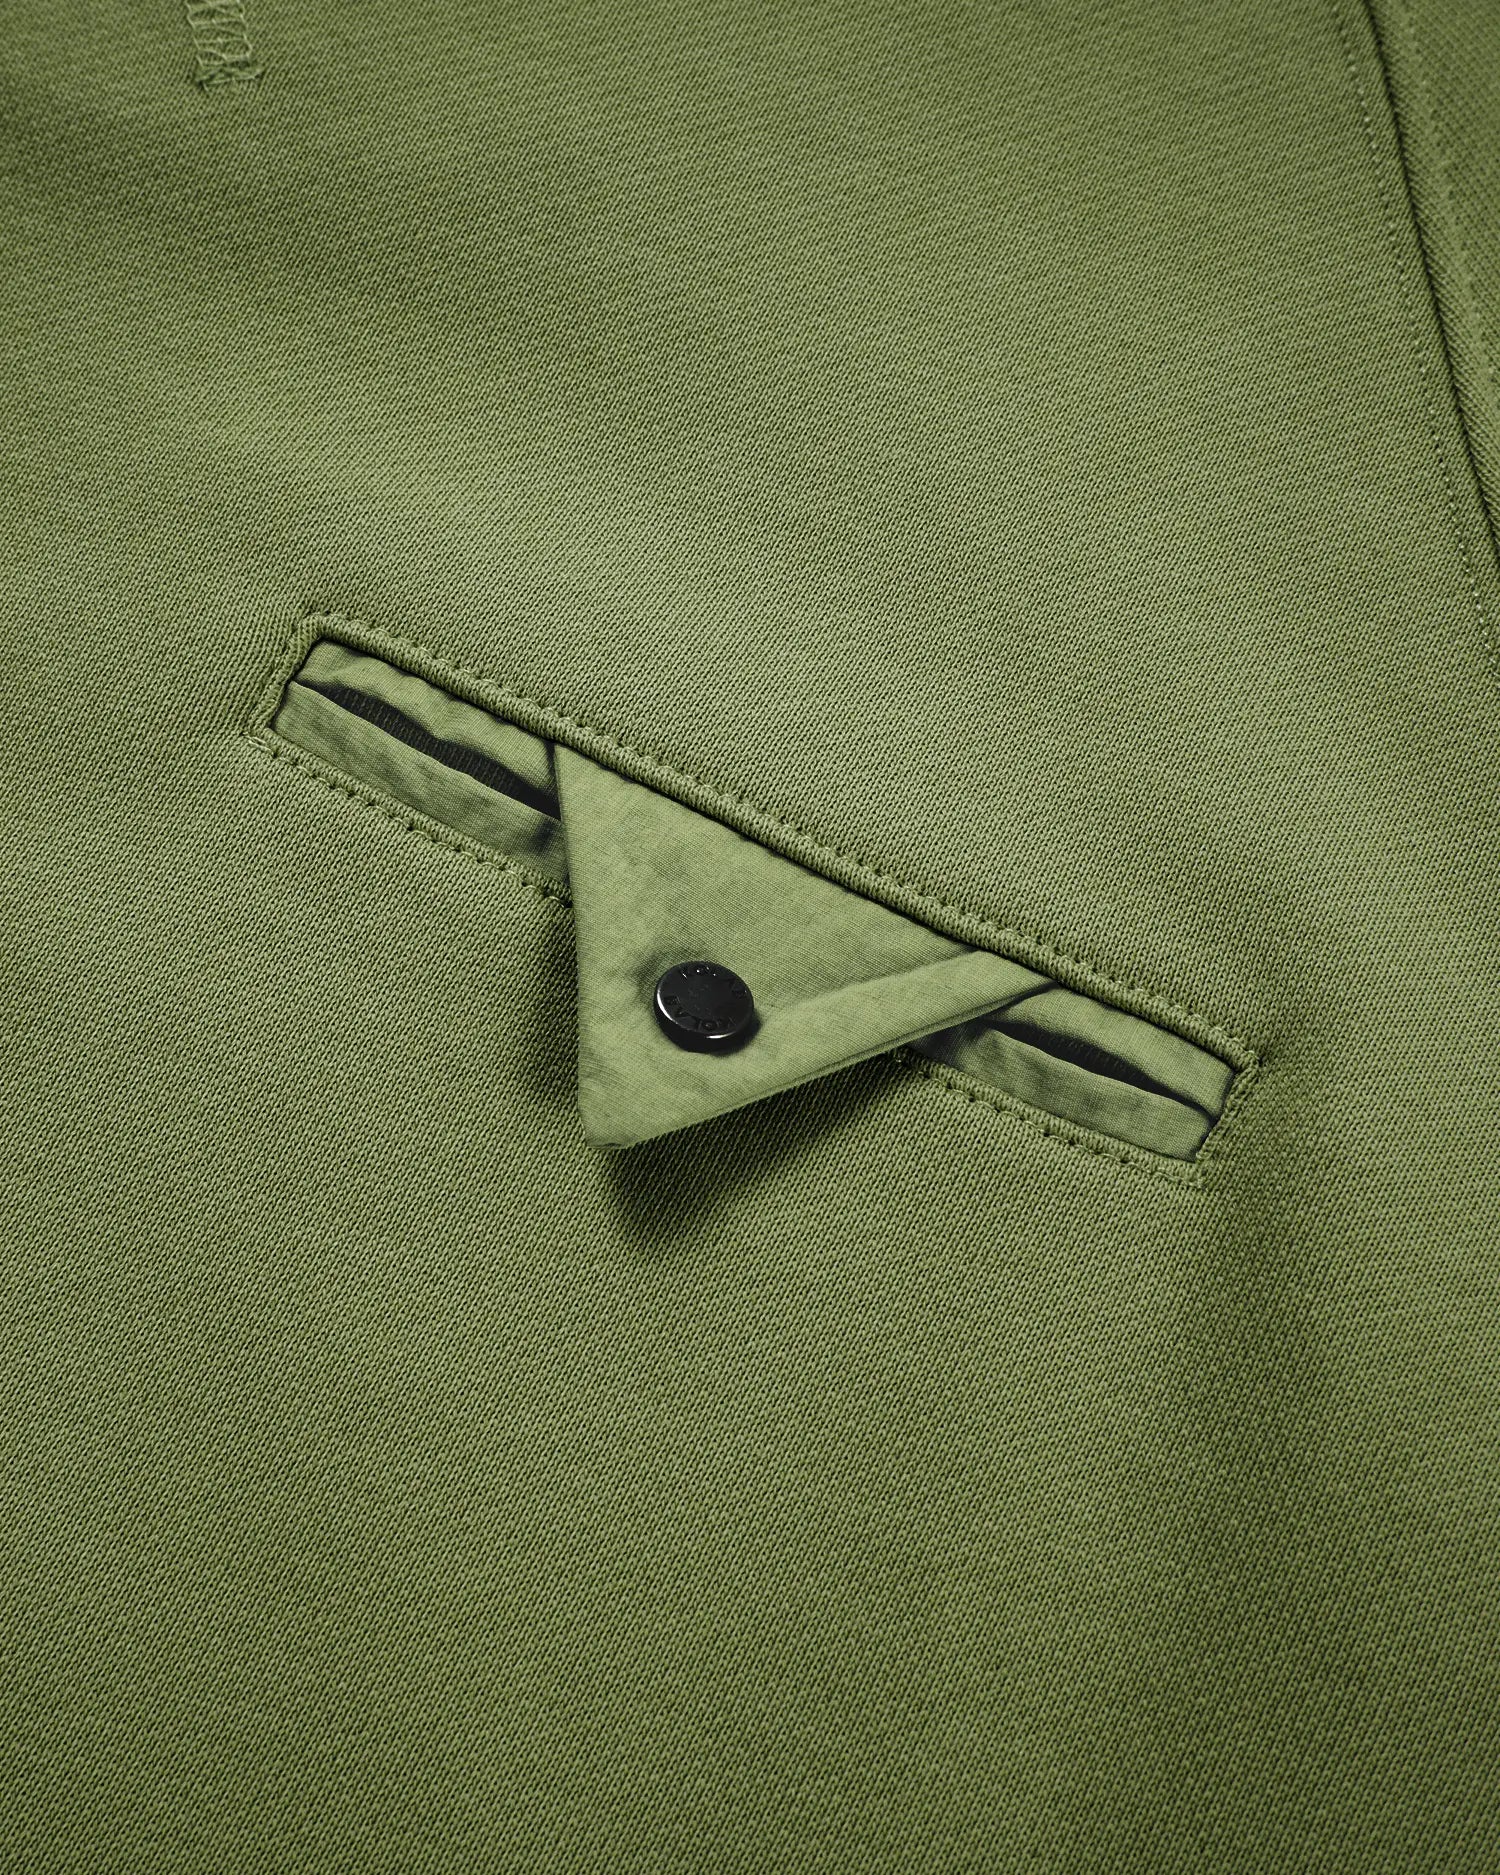 Women's Mixed Fabric Crew Sweatshirt in Military Green 04 #military-green